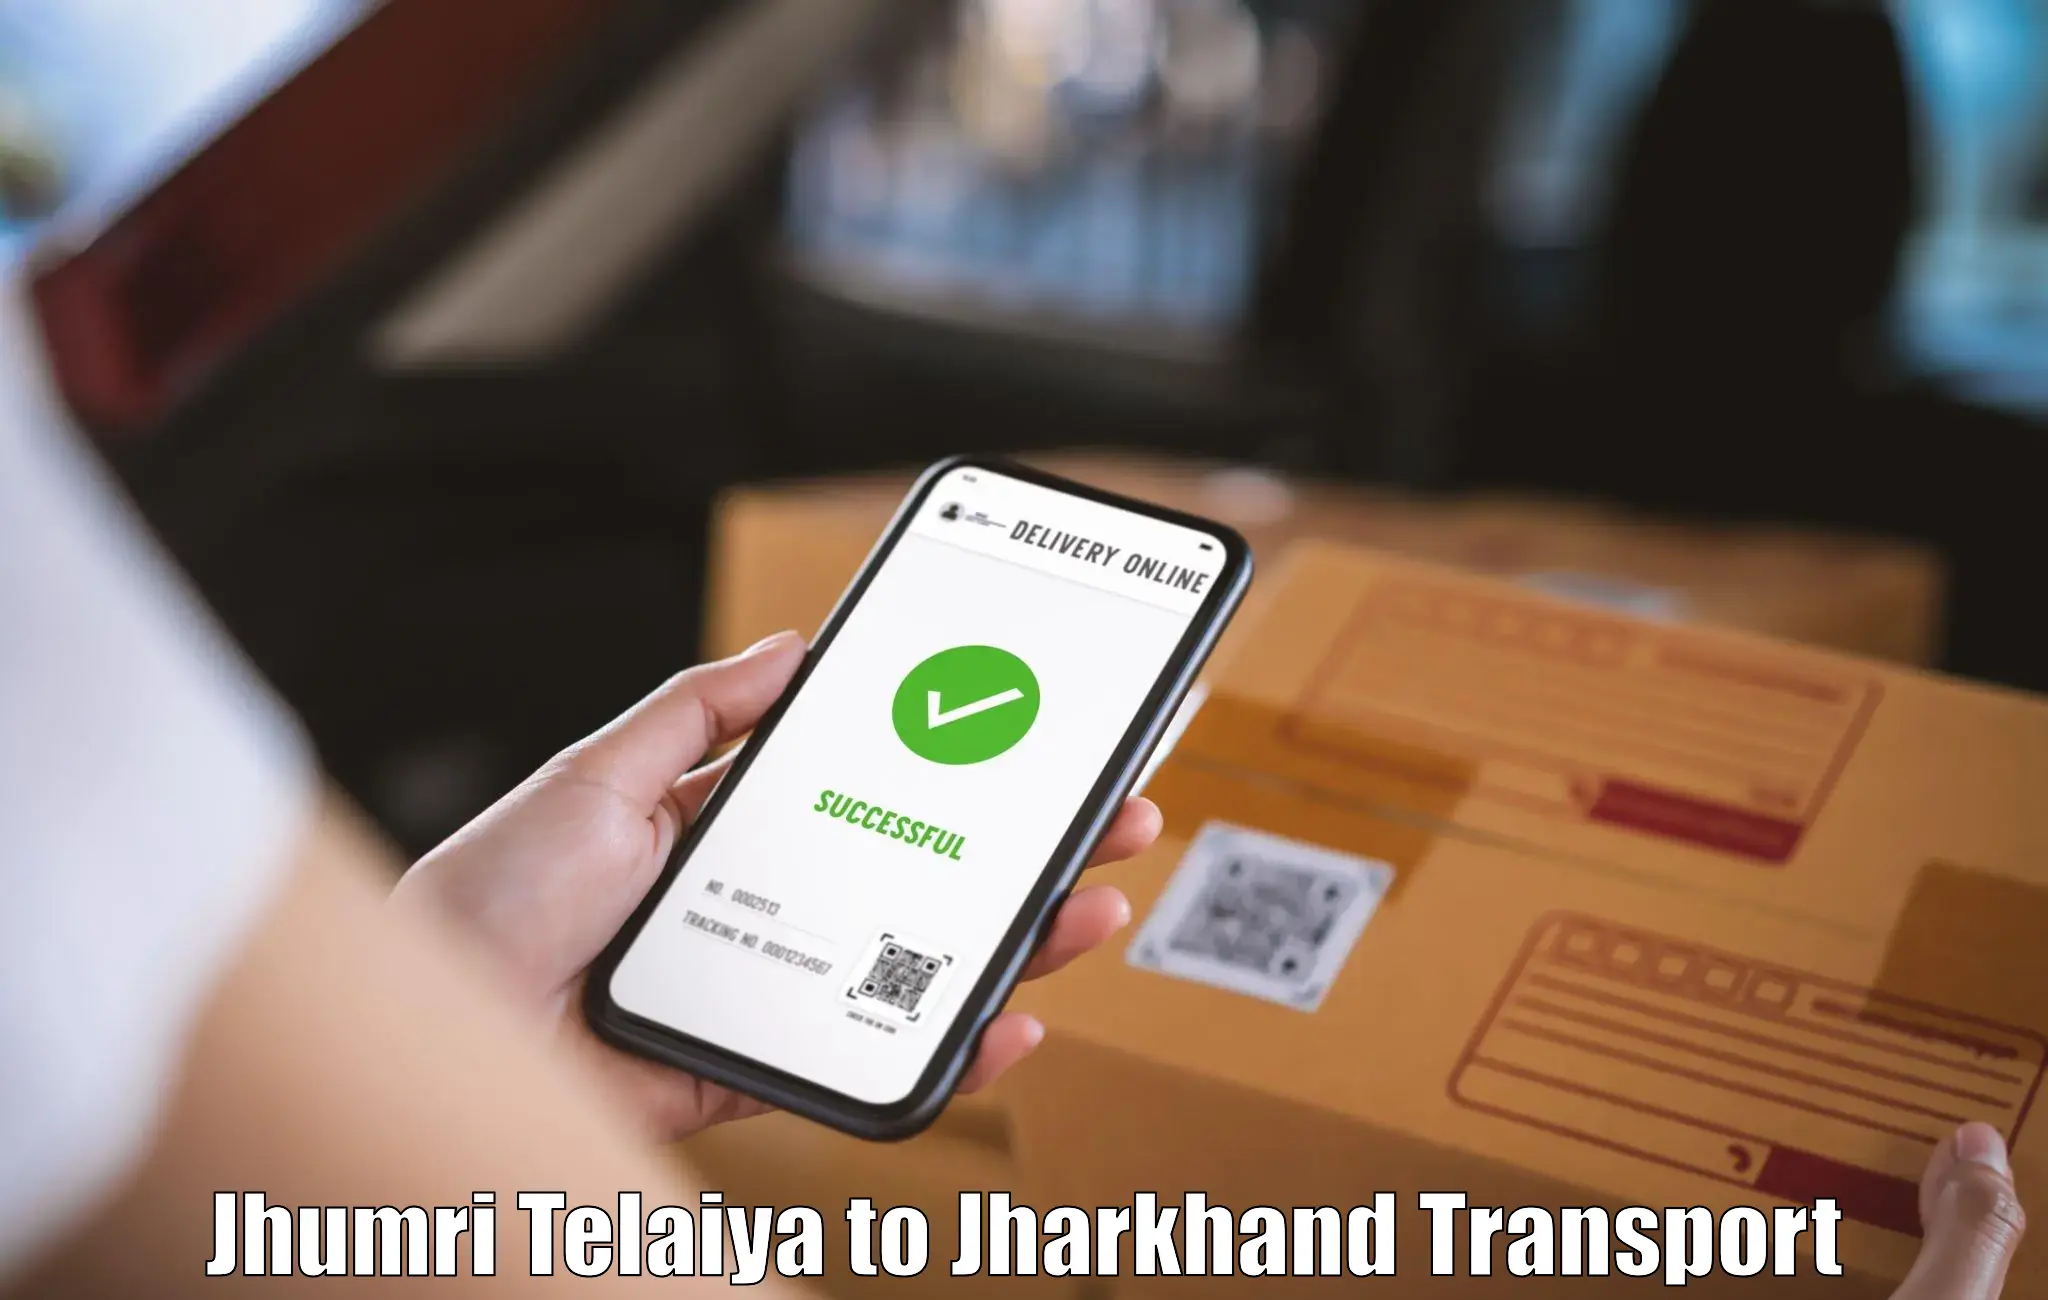 Container transport service Jhumri Telaiya to Jharkhand